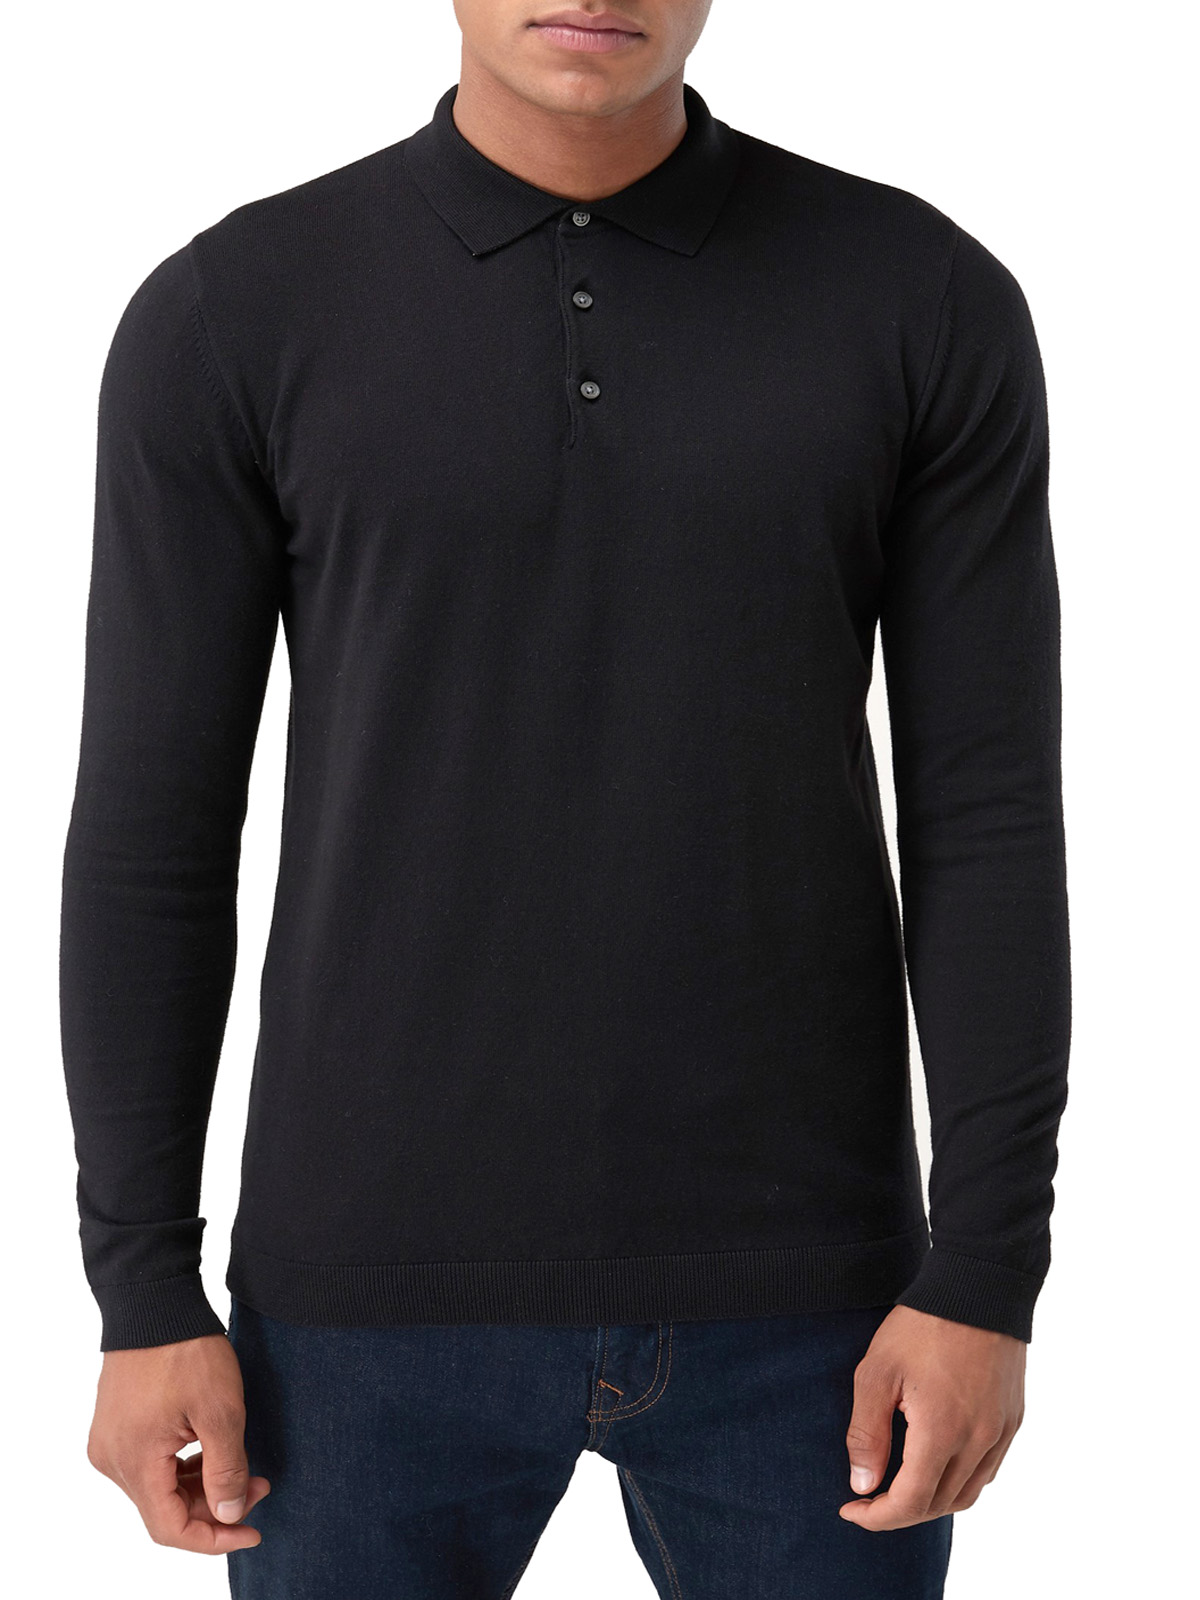 N3XT BLACK Mens Cotton Rich Long Sleeve Polo Shirt - Size Small to XXLarge